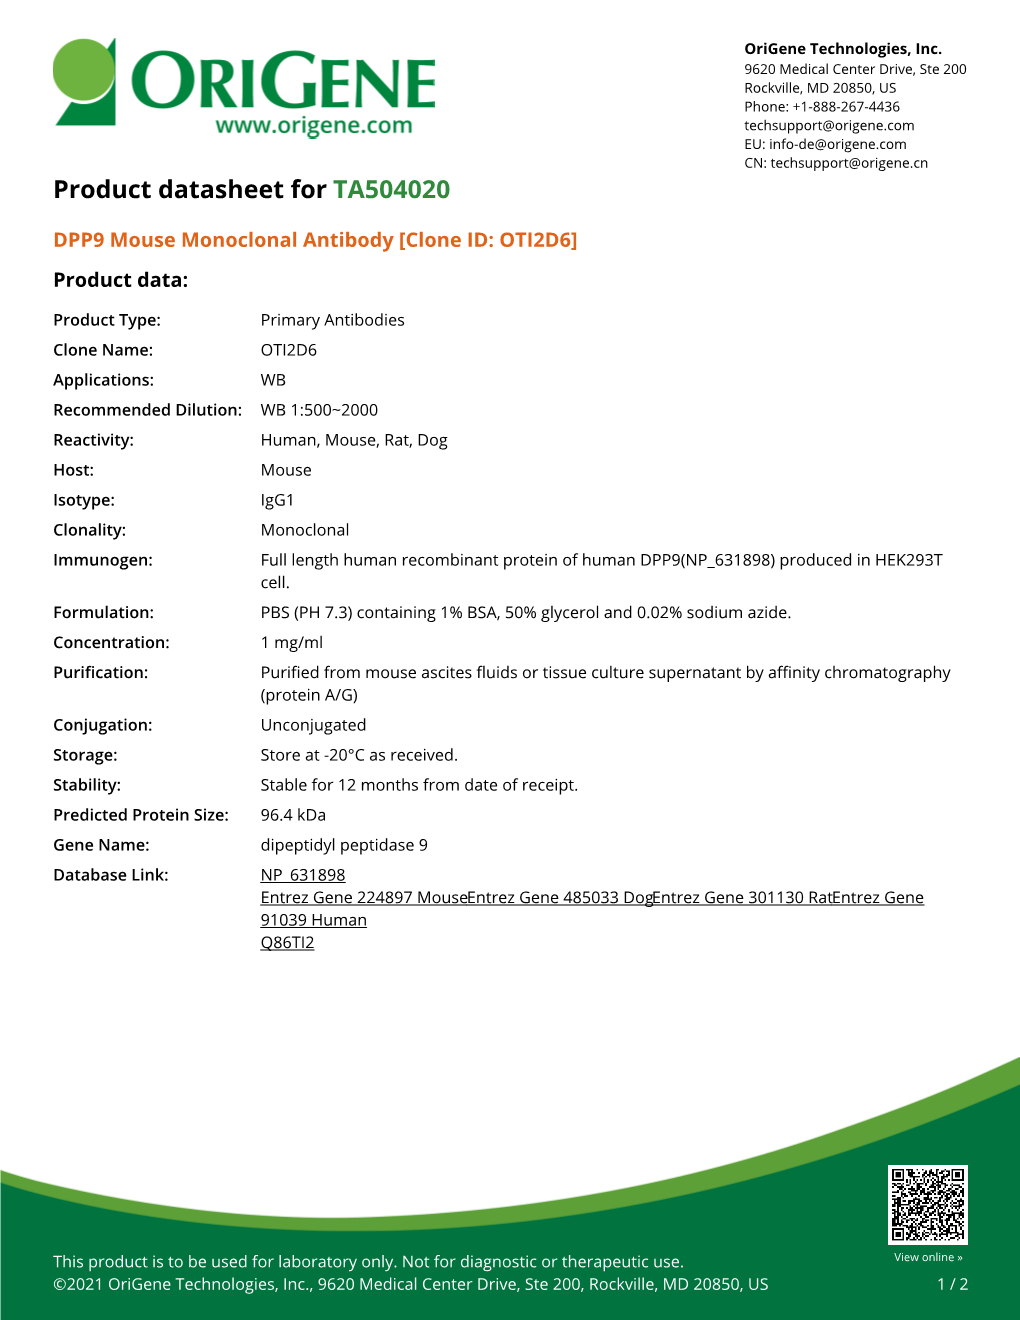 DPP9 Mouse Monoclonal Antibody [Clone ID: OTI2D6] Product Data